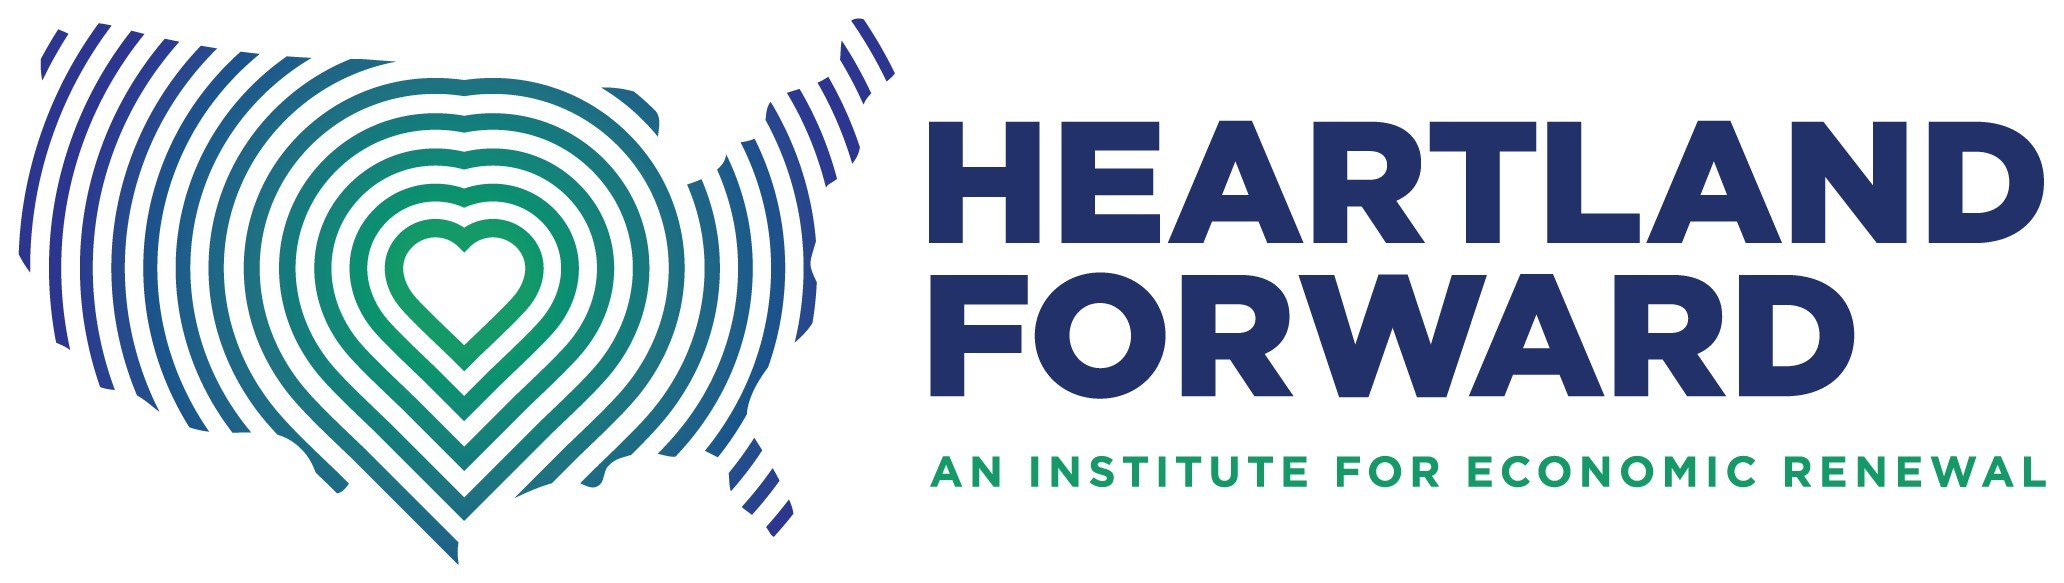 heartland forward logo